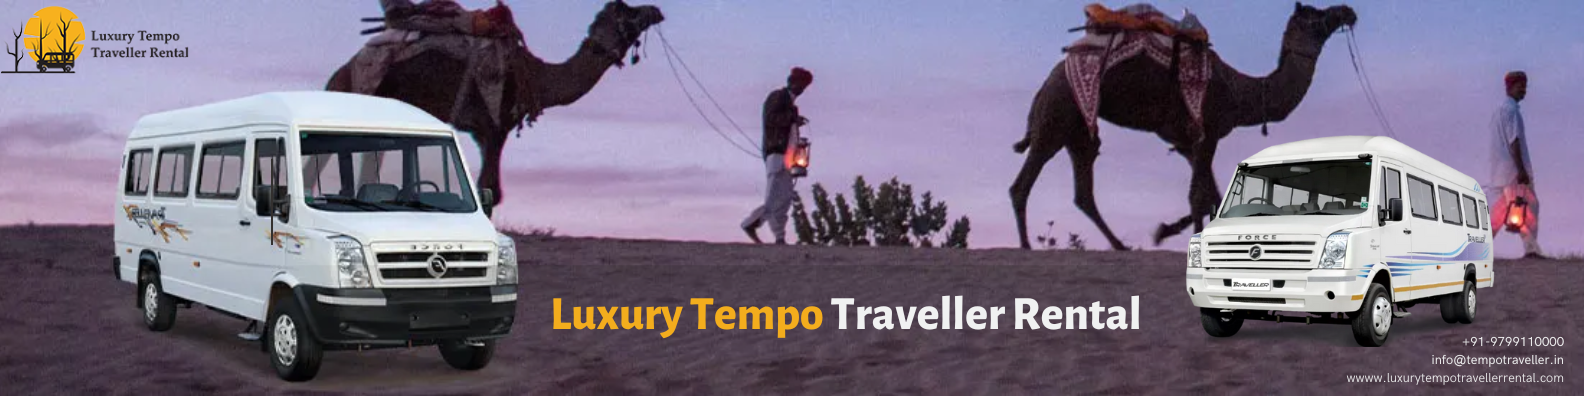 TravellerRental LuxuryTempo 